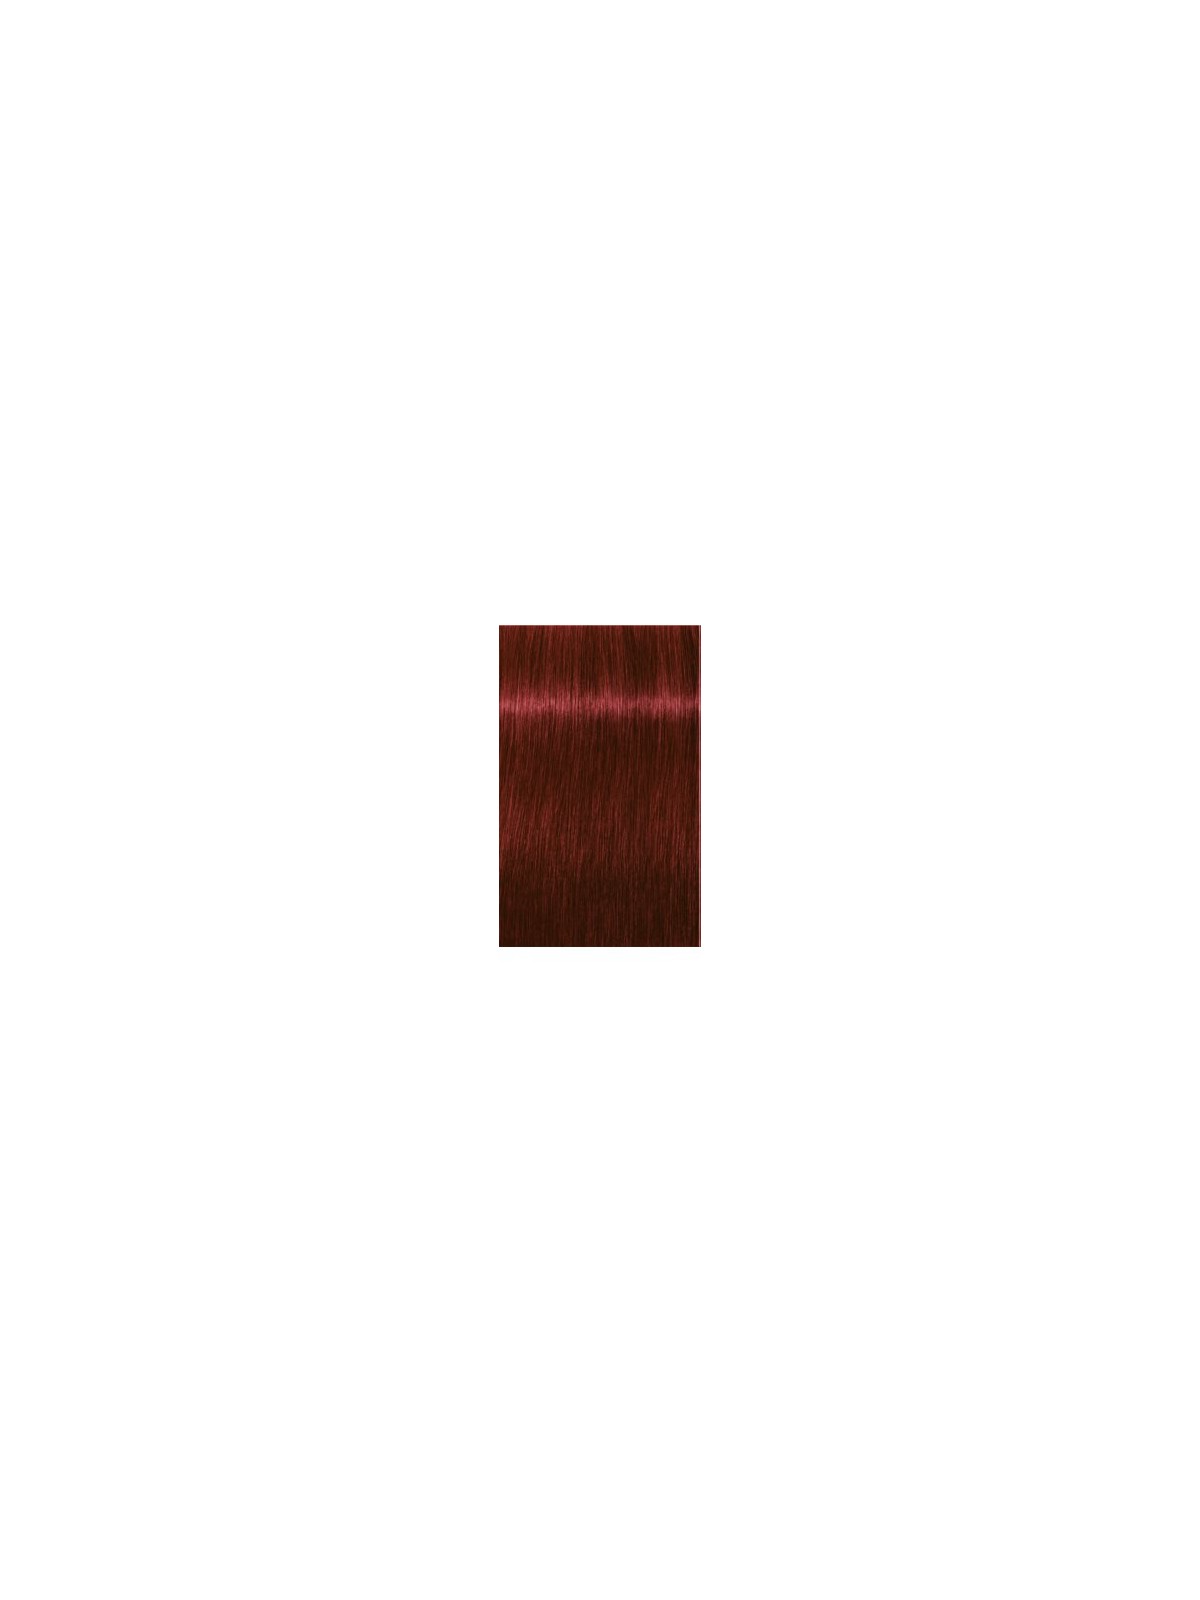 Comprar Schwarzkopf Tinte Permanente IGORA ROYAL 60ml. Nº 5-88 Castaño claro rojo intenso en Tintes con amoniaco por sólo 13,82 € o un precio específico de 8,29 € en Thalie Care